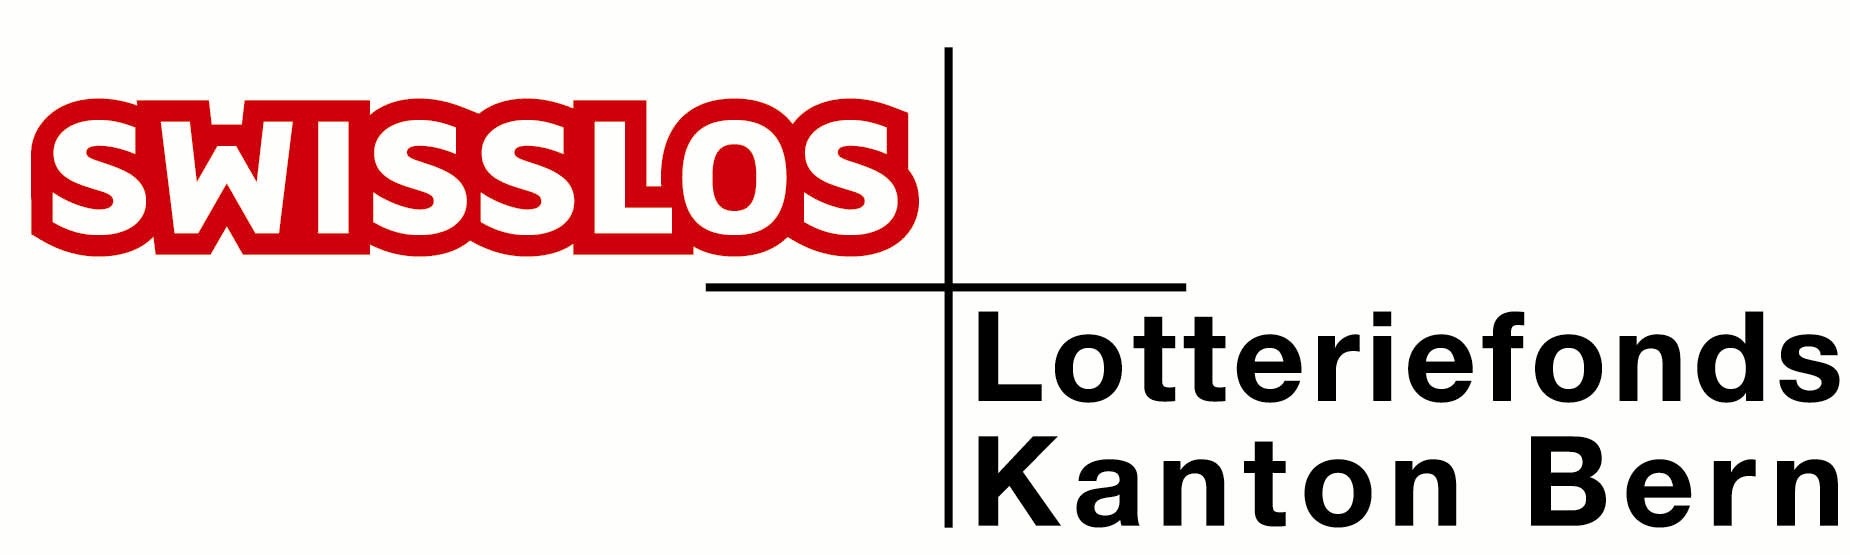 Swisslos Lotteriefonds Kanton Bern